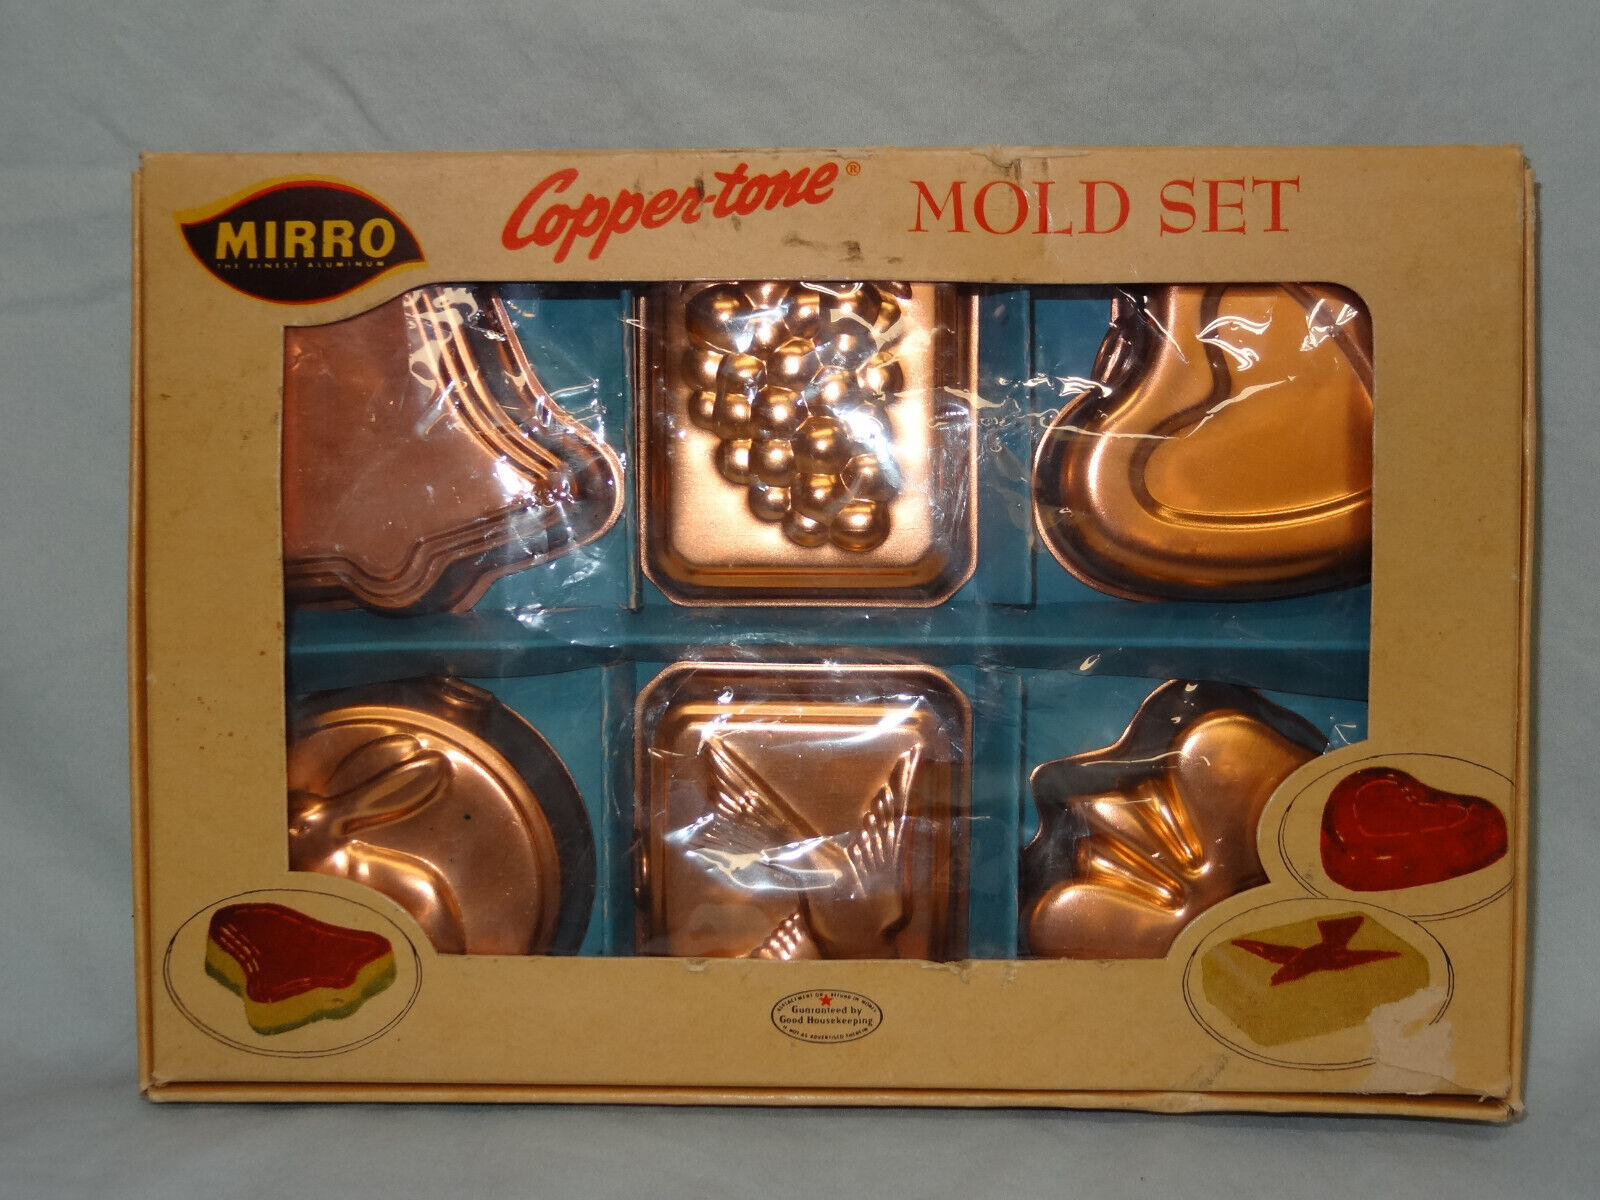 Mirro 6 Mini Copper-tone Mold Set,Wall Plaques, USA,Original Display Box,Vintage